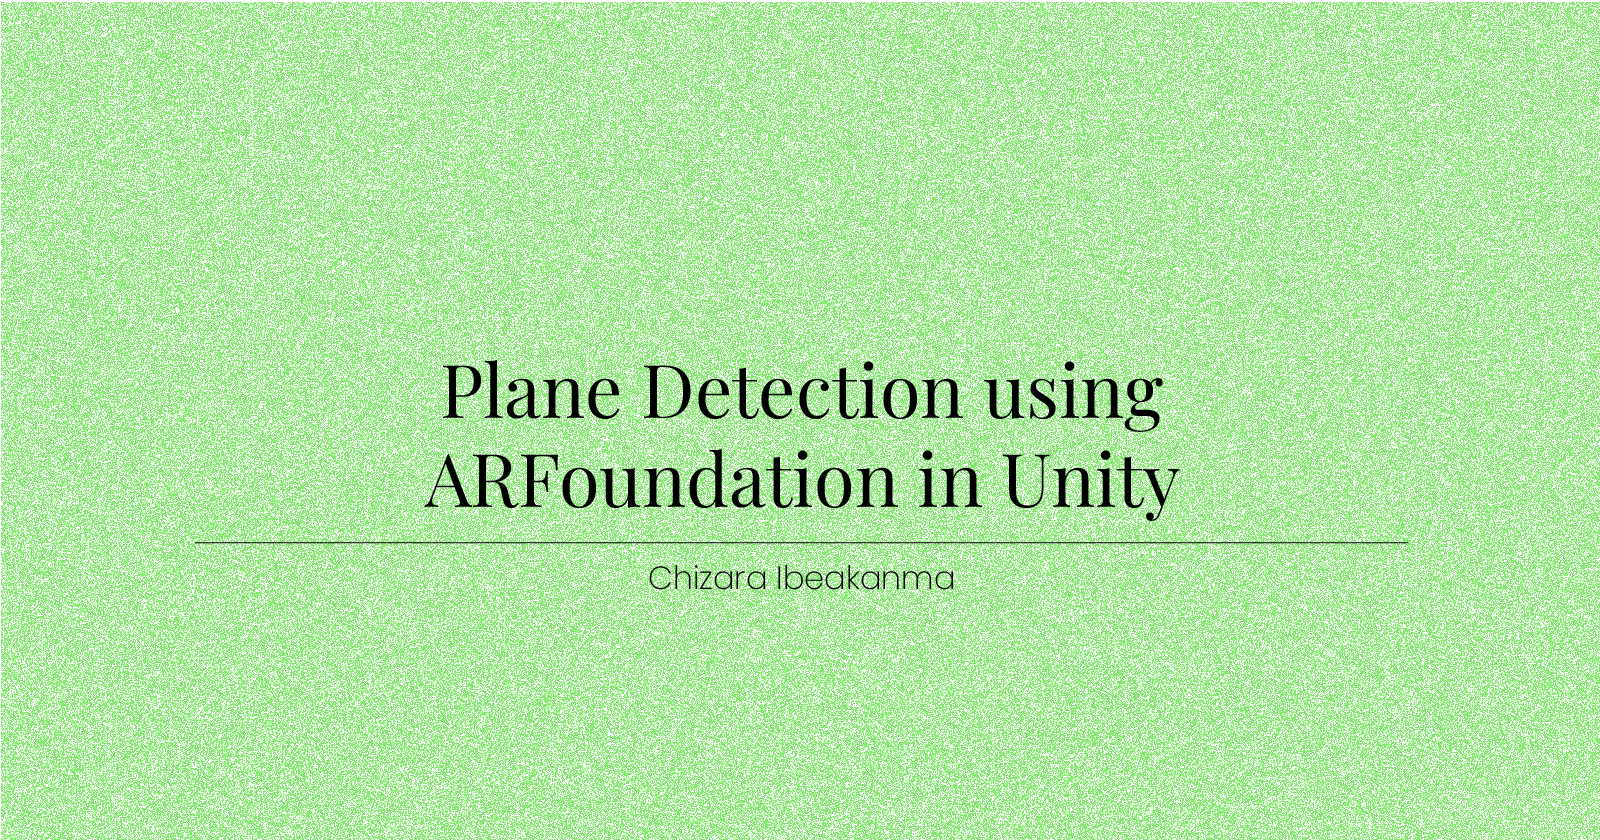 Plane Detection using ARFoundation in Unity